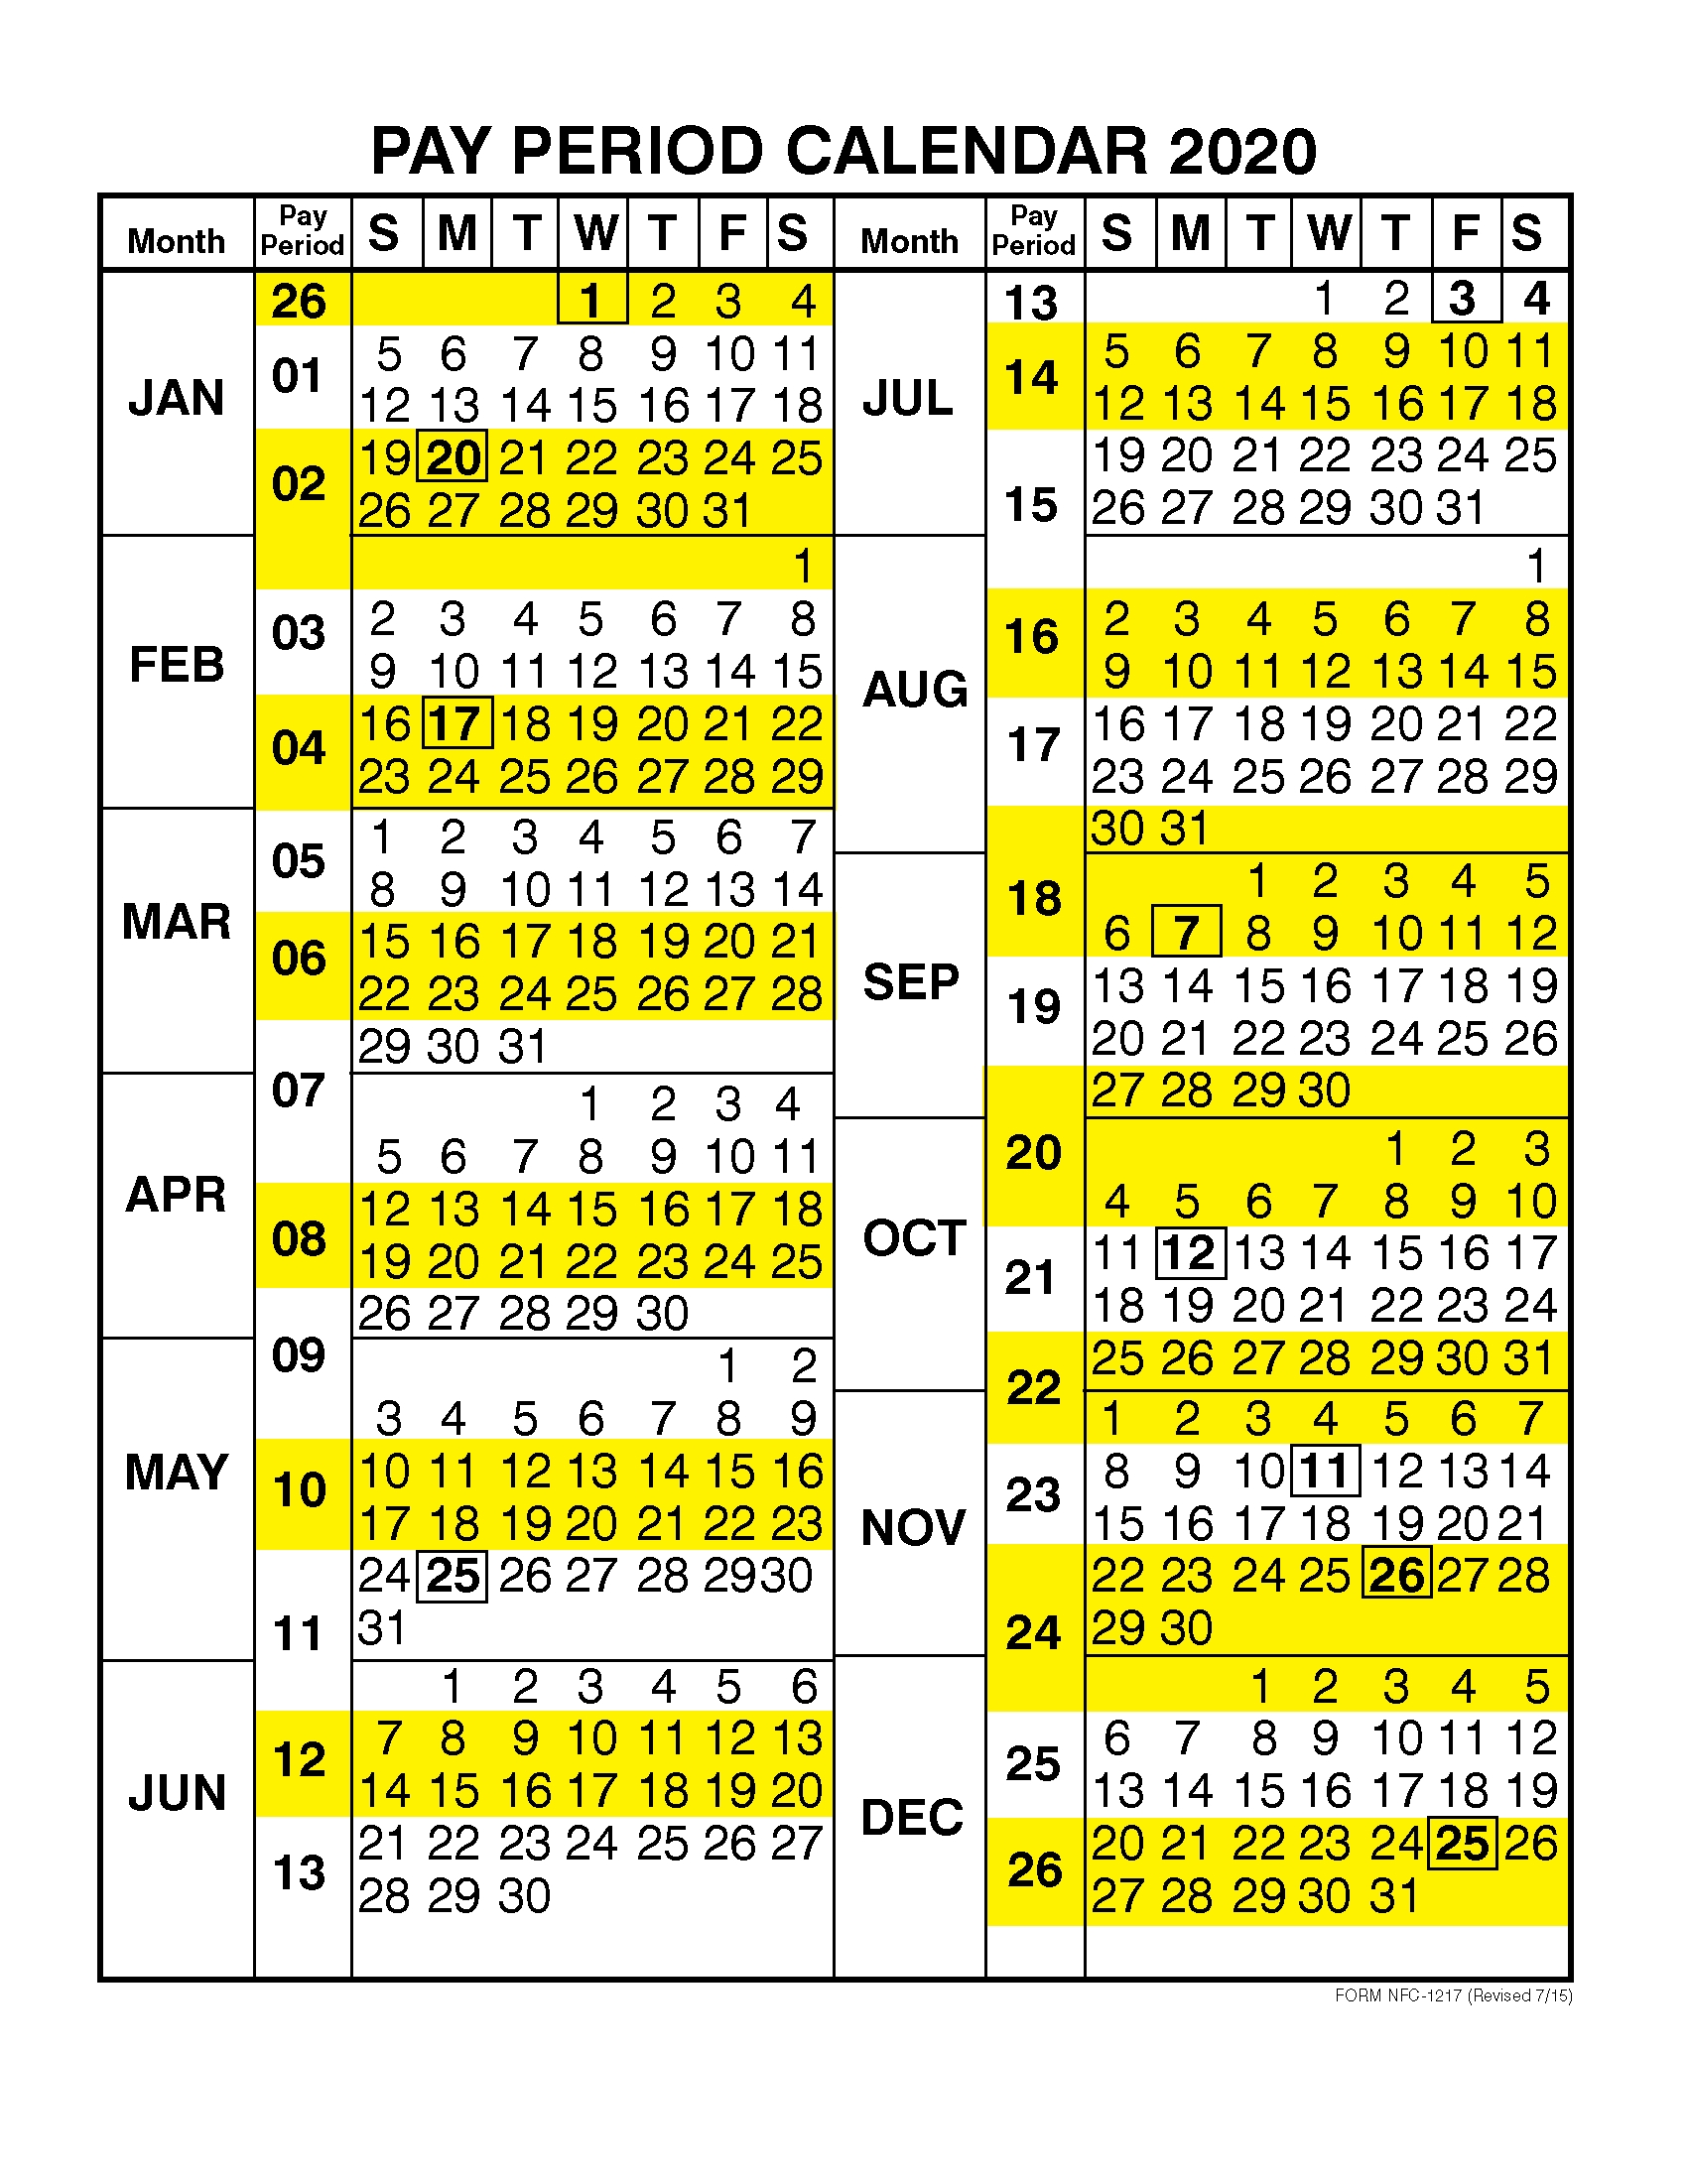 Ctu Payroll Calendar 2021 | 2021 Pay Periods Calendar-Pay Period Calendar 2021